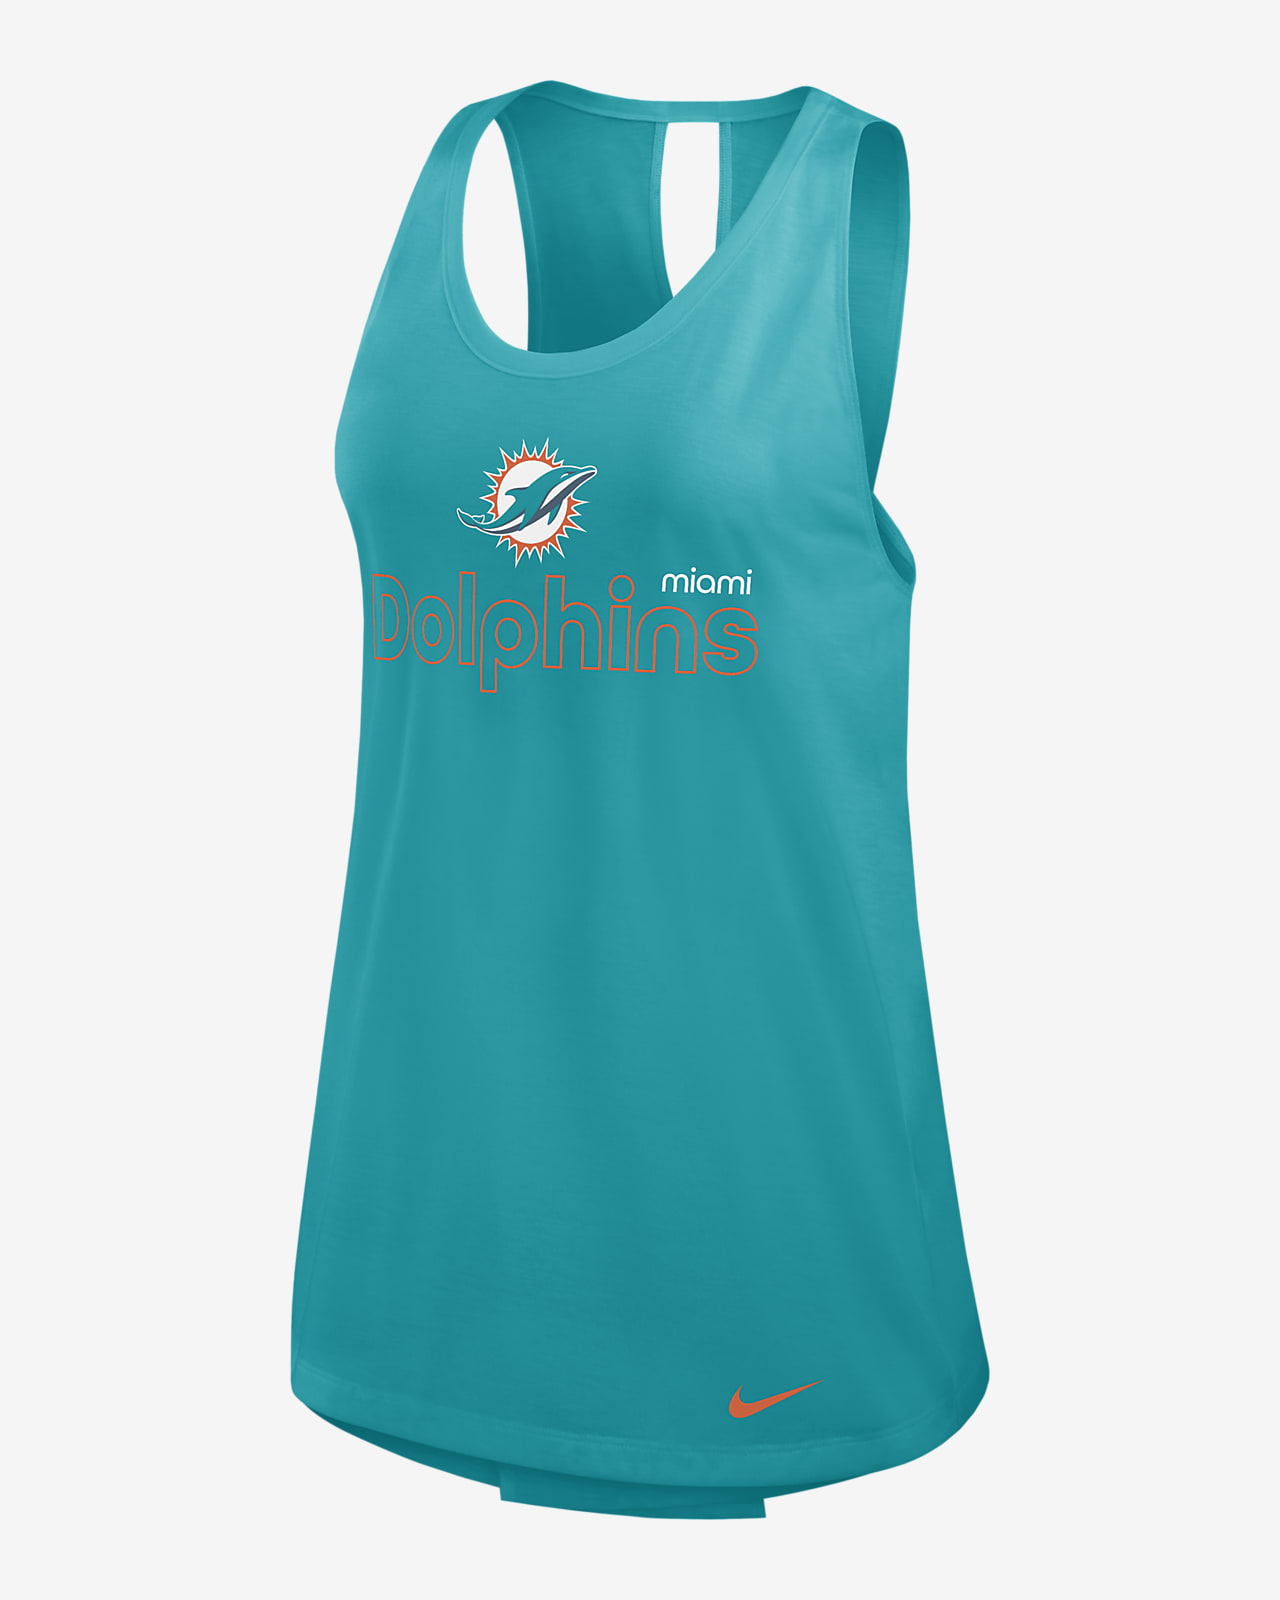 Camiseta de tirantes Nike Dri-FIT de la NFL para mujer Miami Dolphins